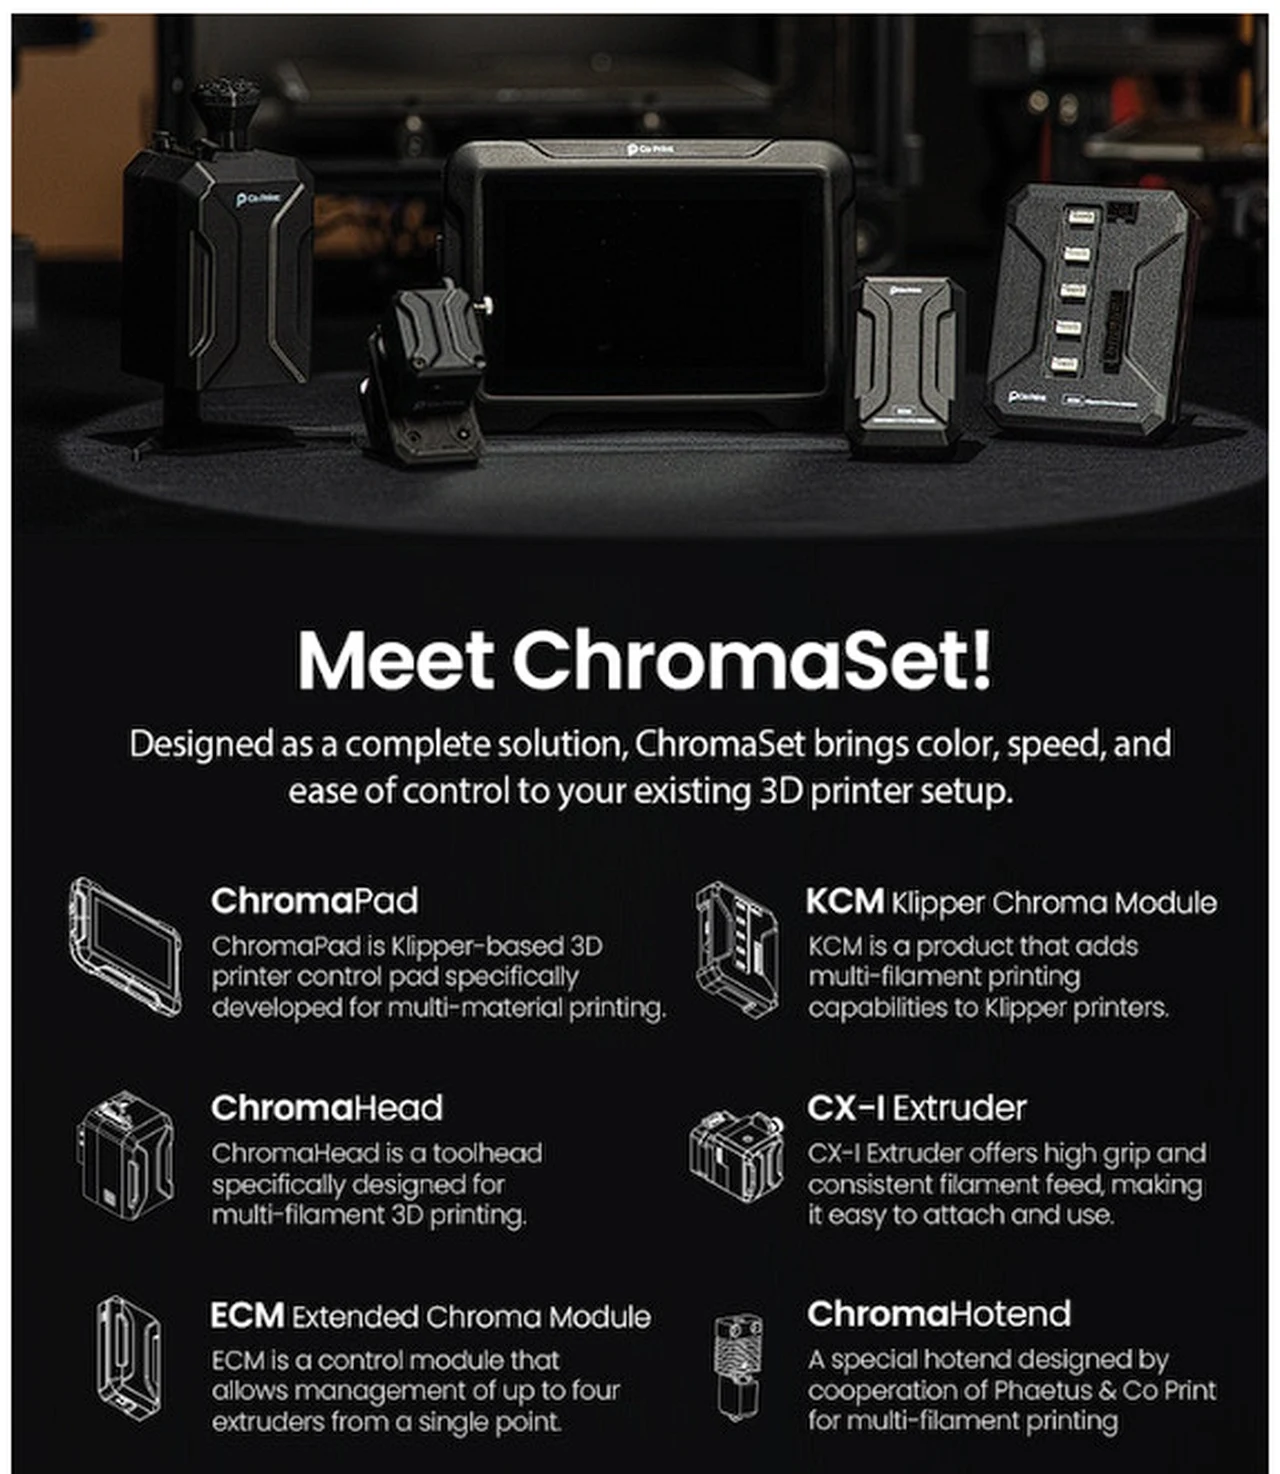 ChromaSet 3D printing system